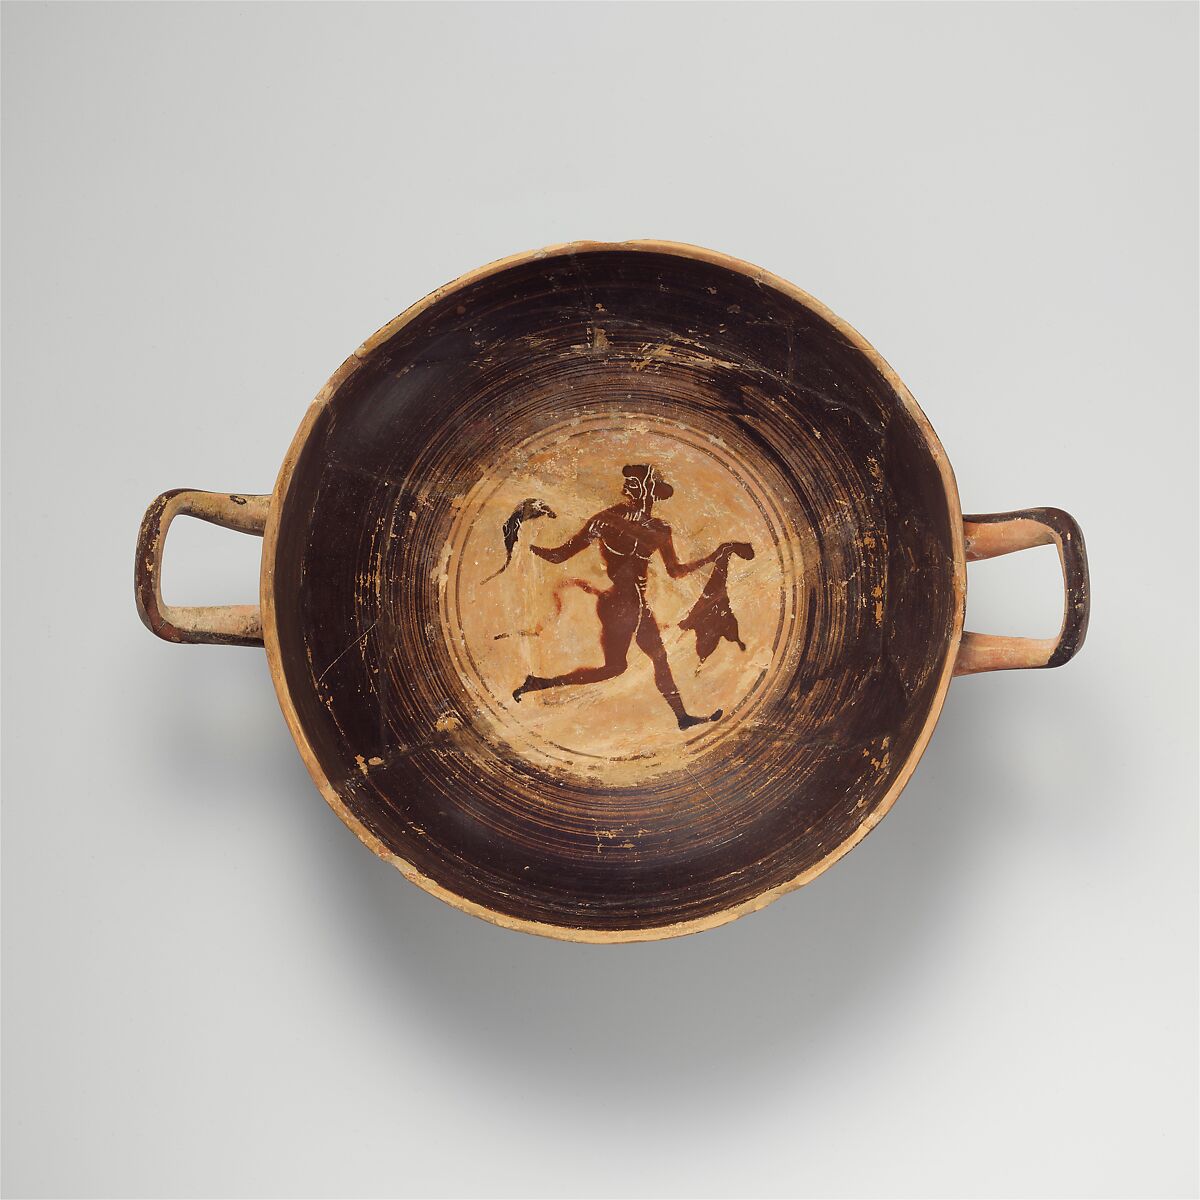 Terracotta kylix (drinking cup), Terracotta, Greek, Attic or Boeotian 